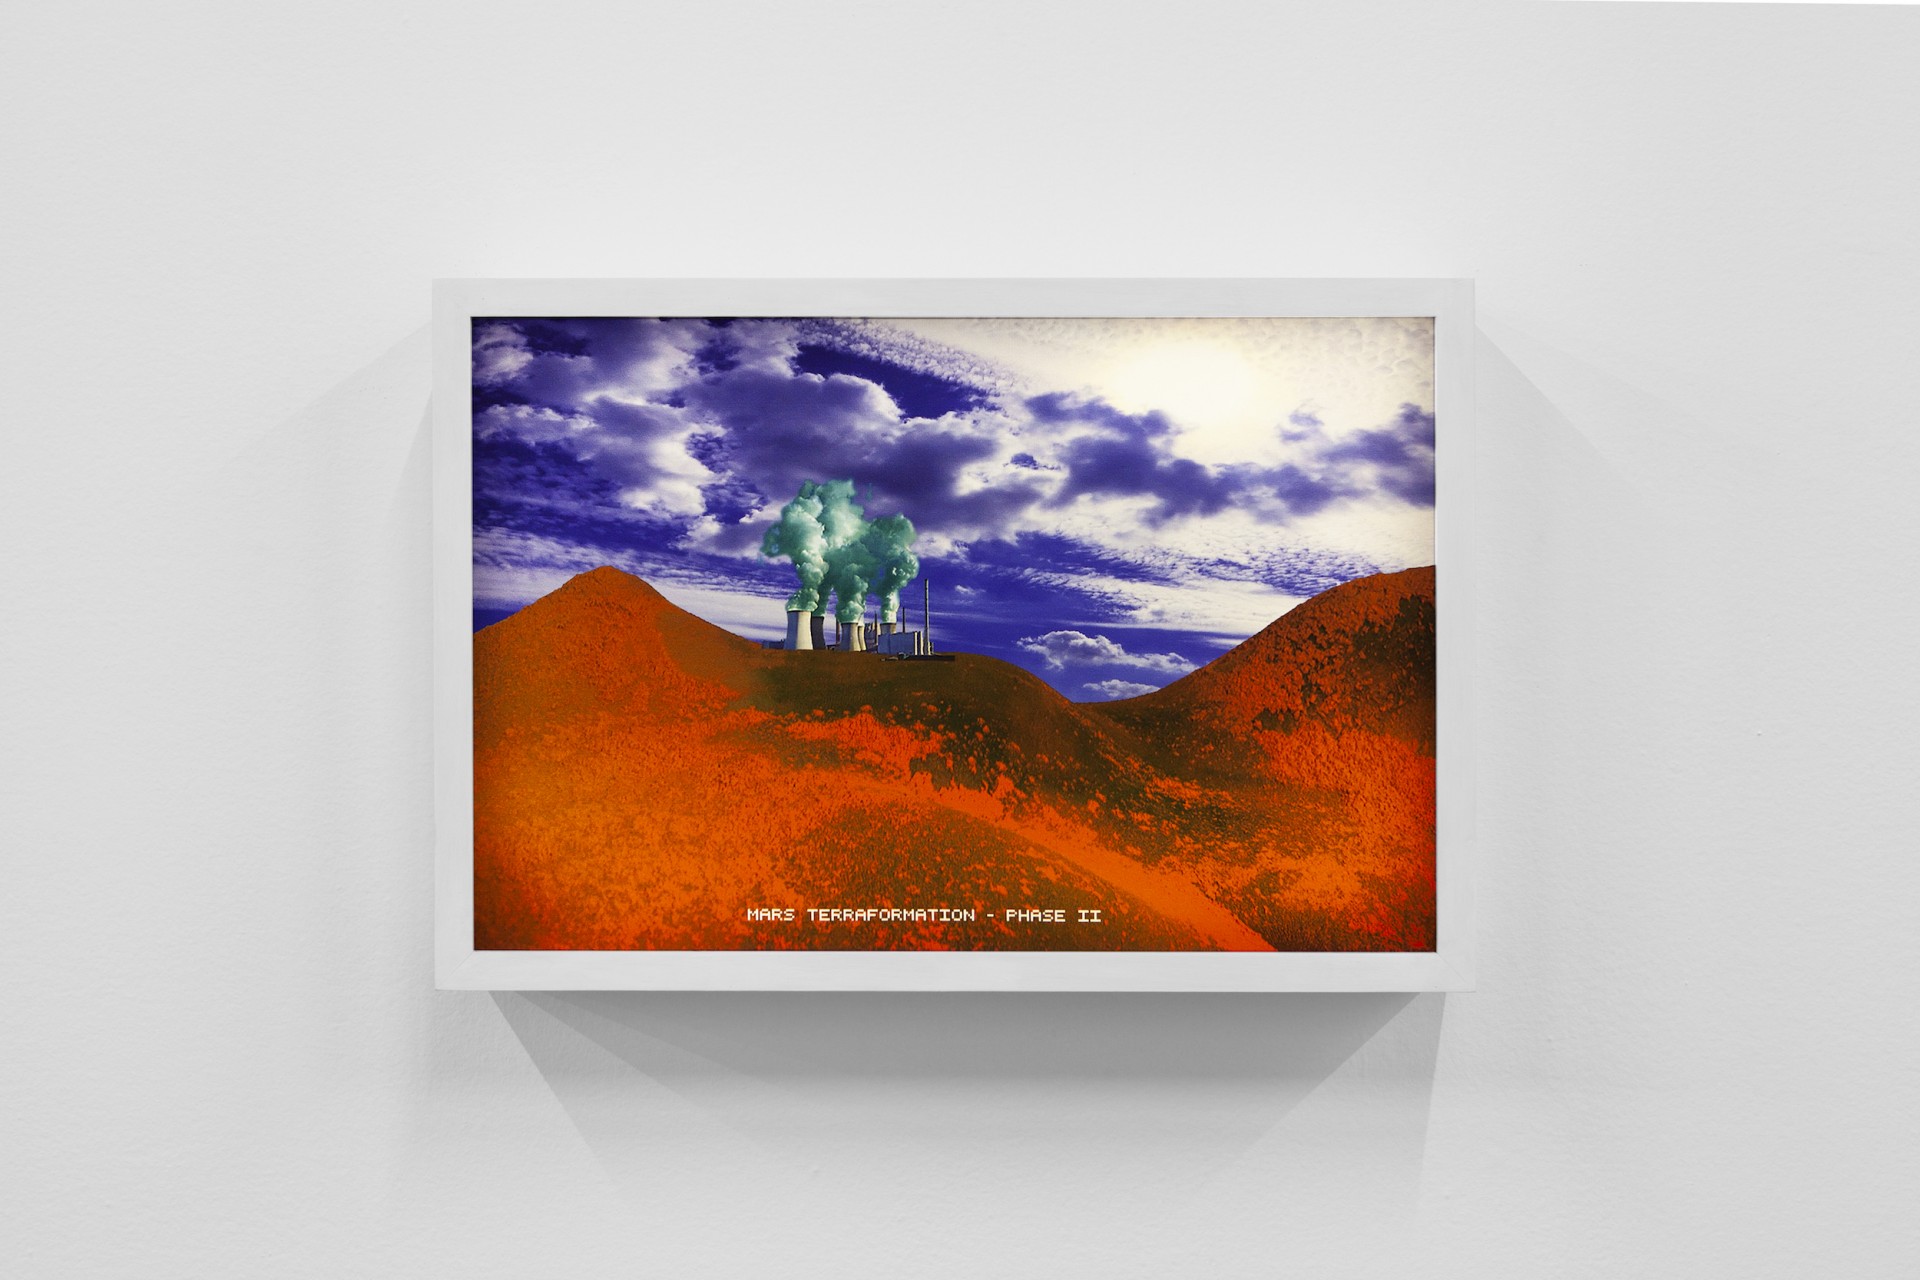 Nash Glynn, *Mars Terraformation - Phase II*, 2019. Diptych, photomontage, light boxes